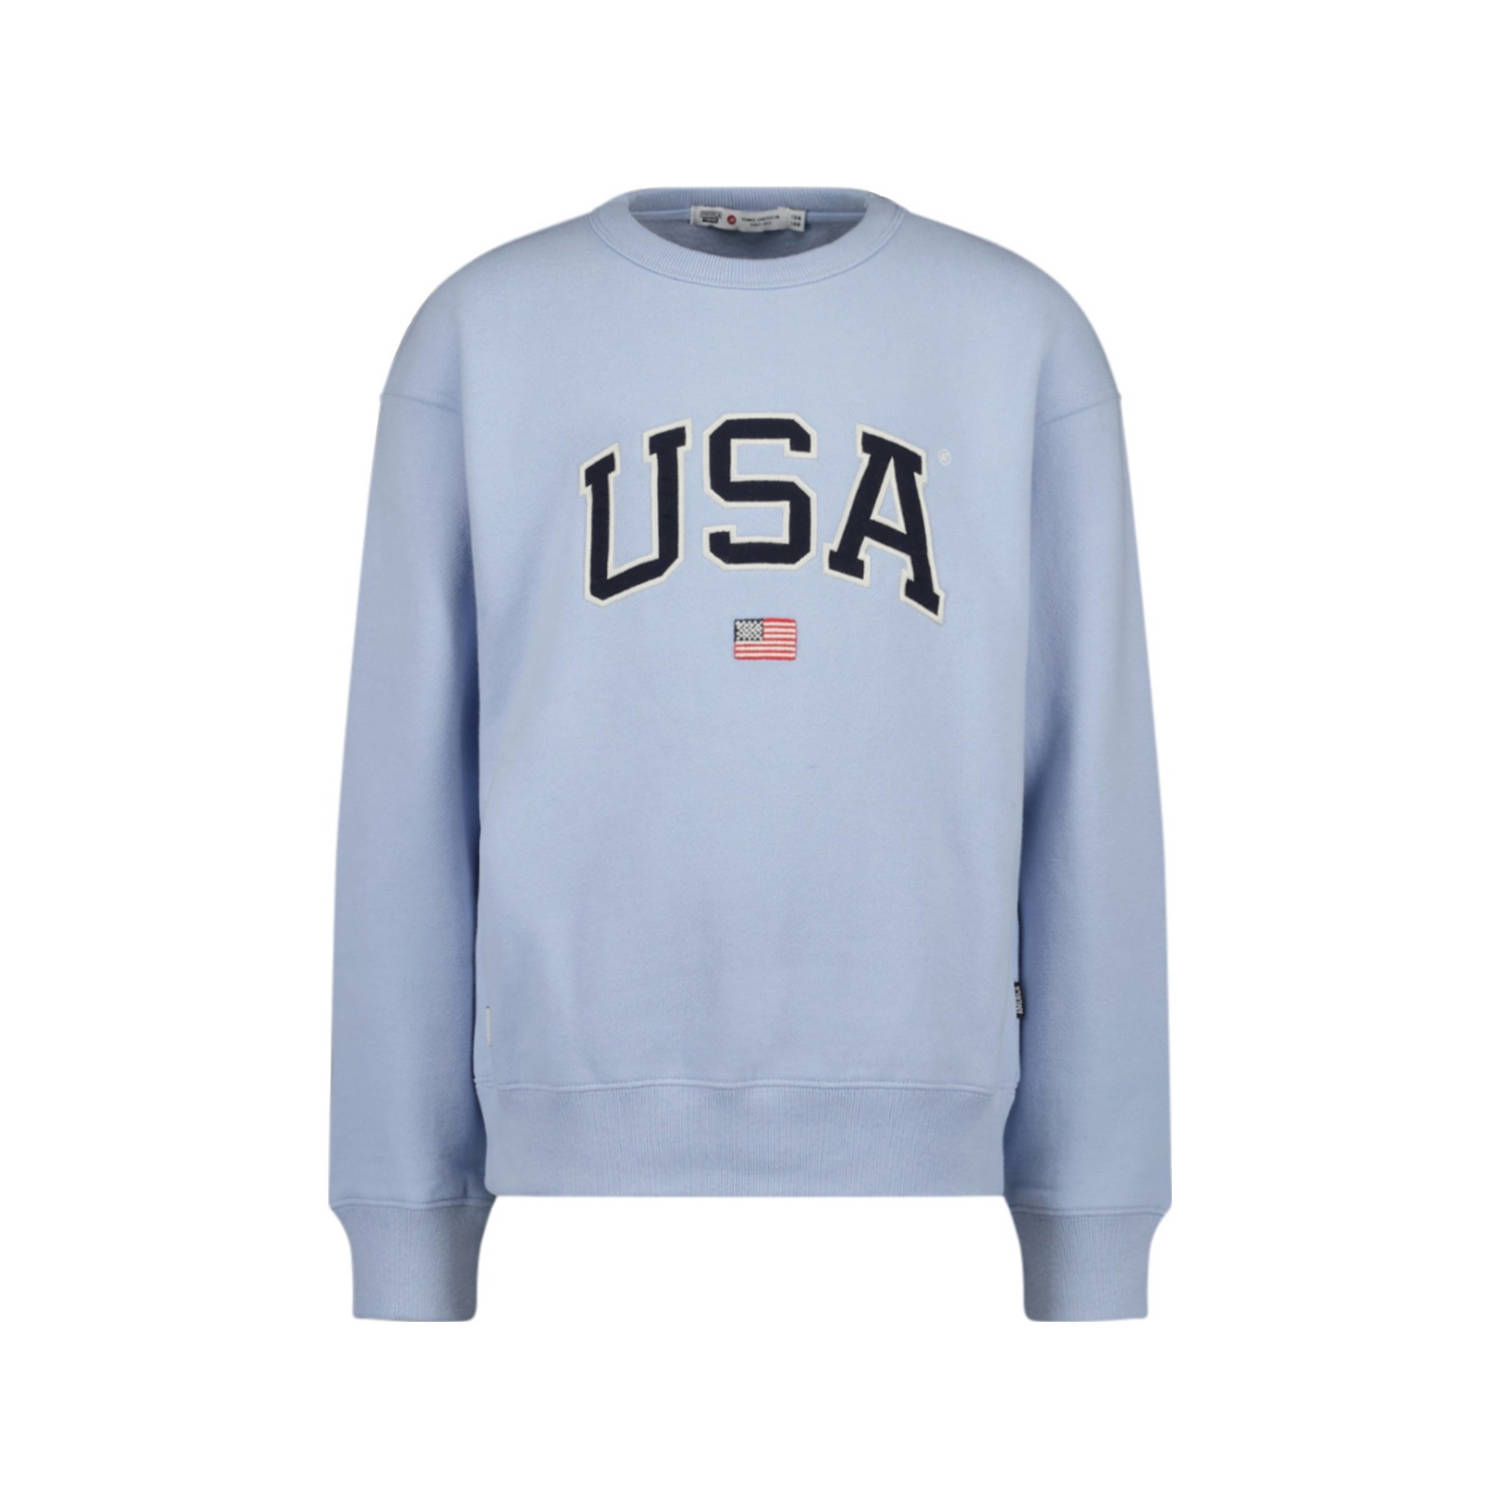 America Today sweater Soel JR met tekst babyblauw